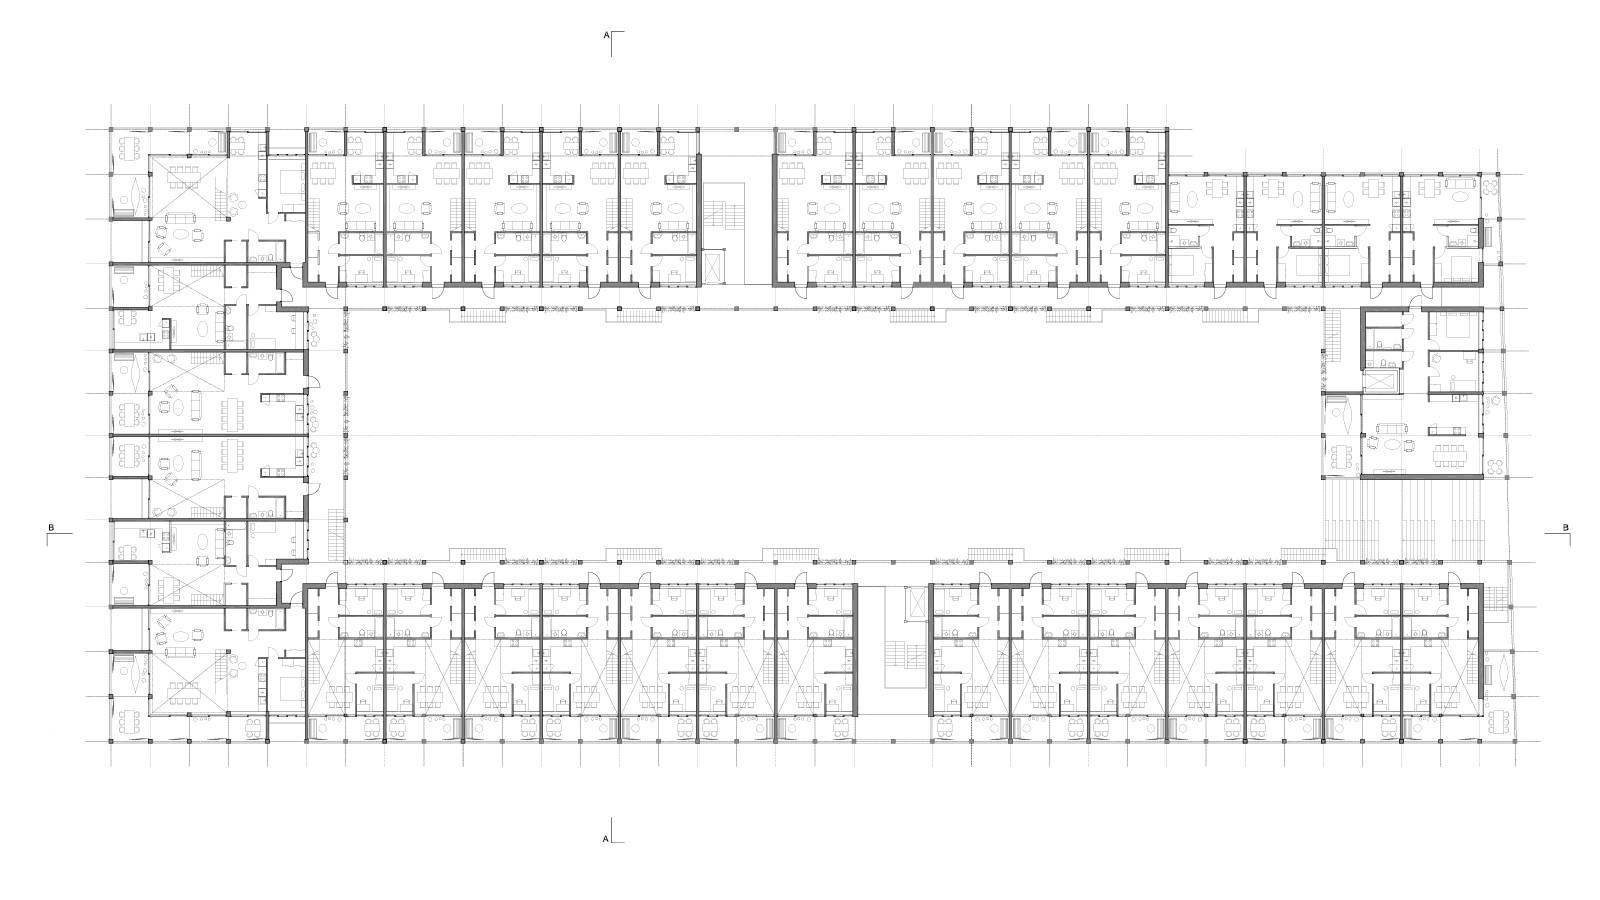 UPPER FLOOR HOUSING PLAN - Nydalsveien 32B – “Huset” - SPOL Architects